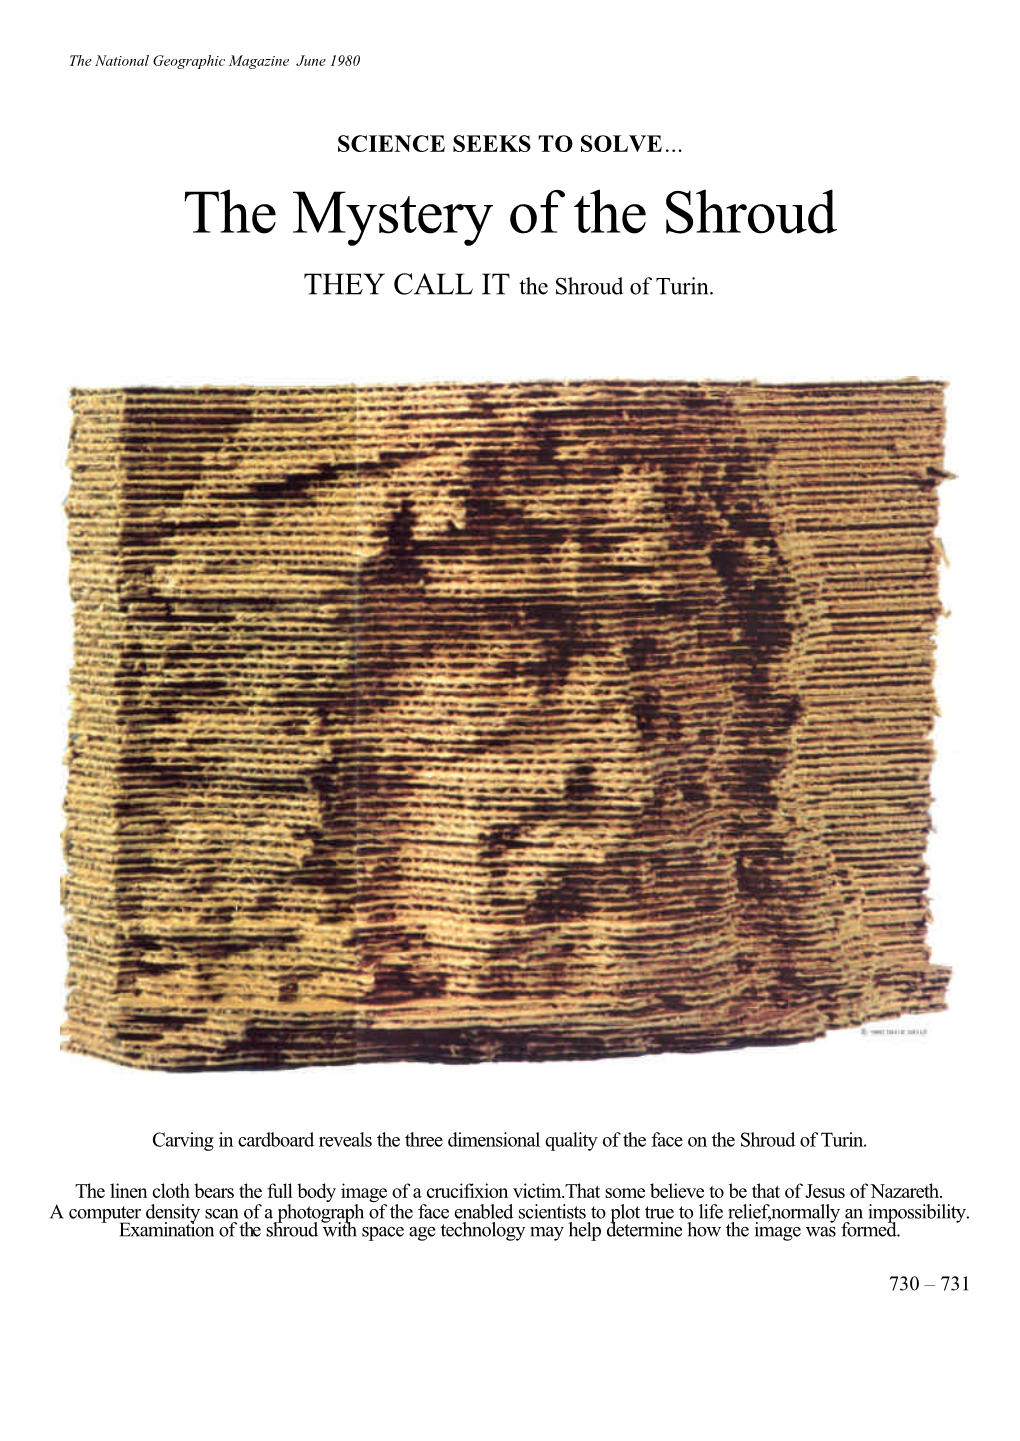 The Mystery of the Shroud